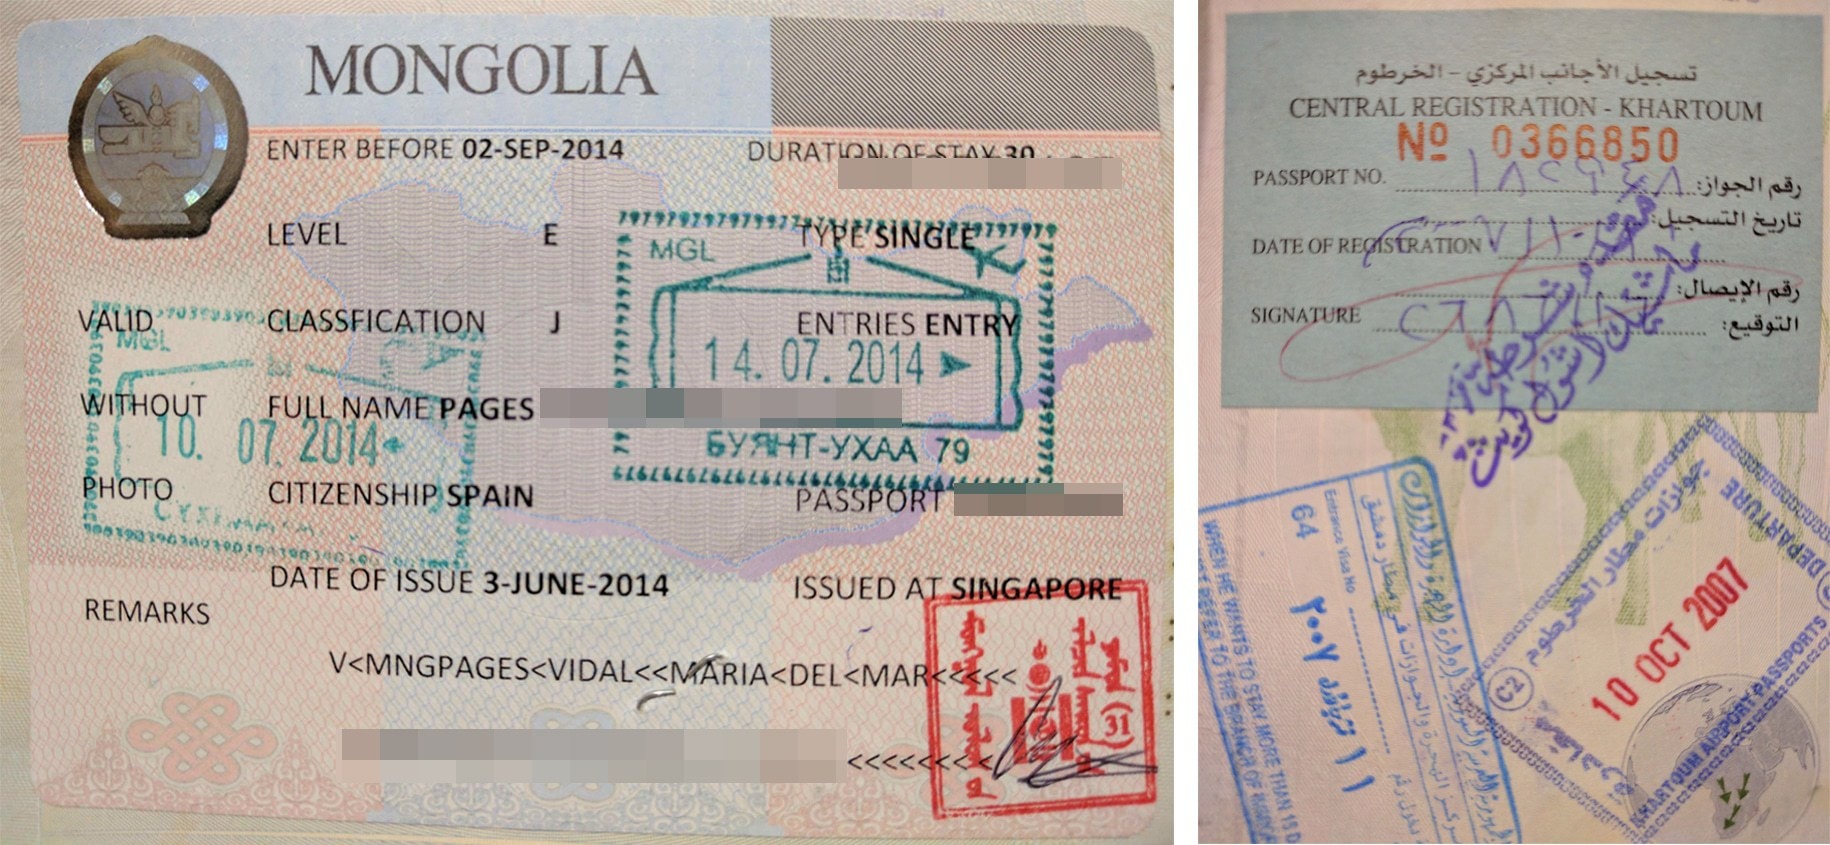 Passport stamp for Mongolia and North Sudan